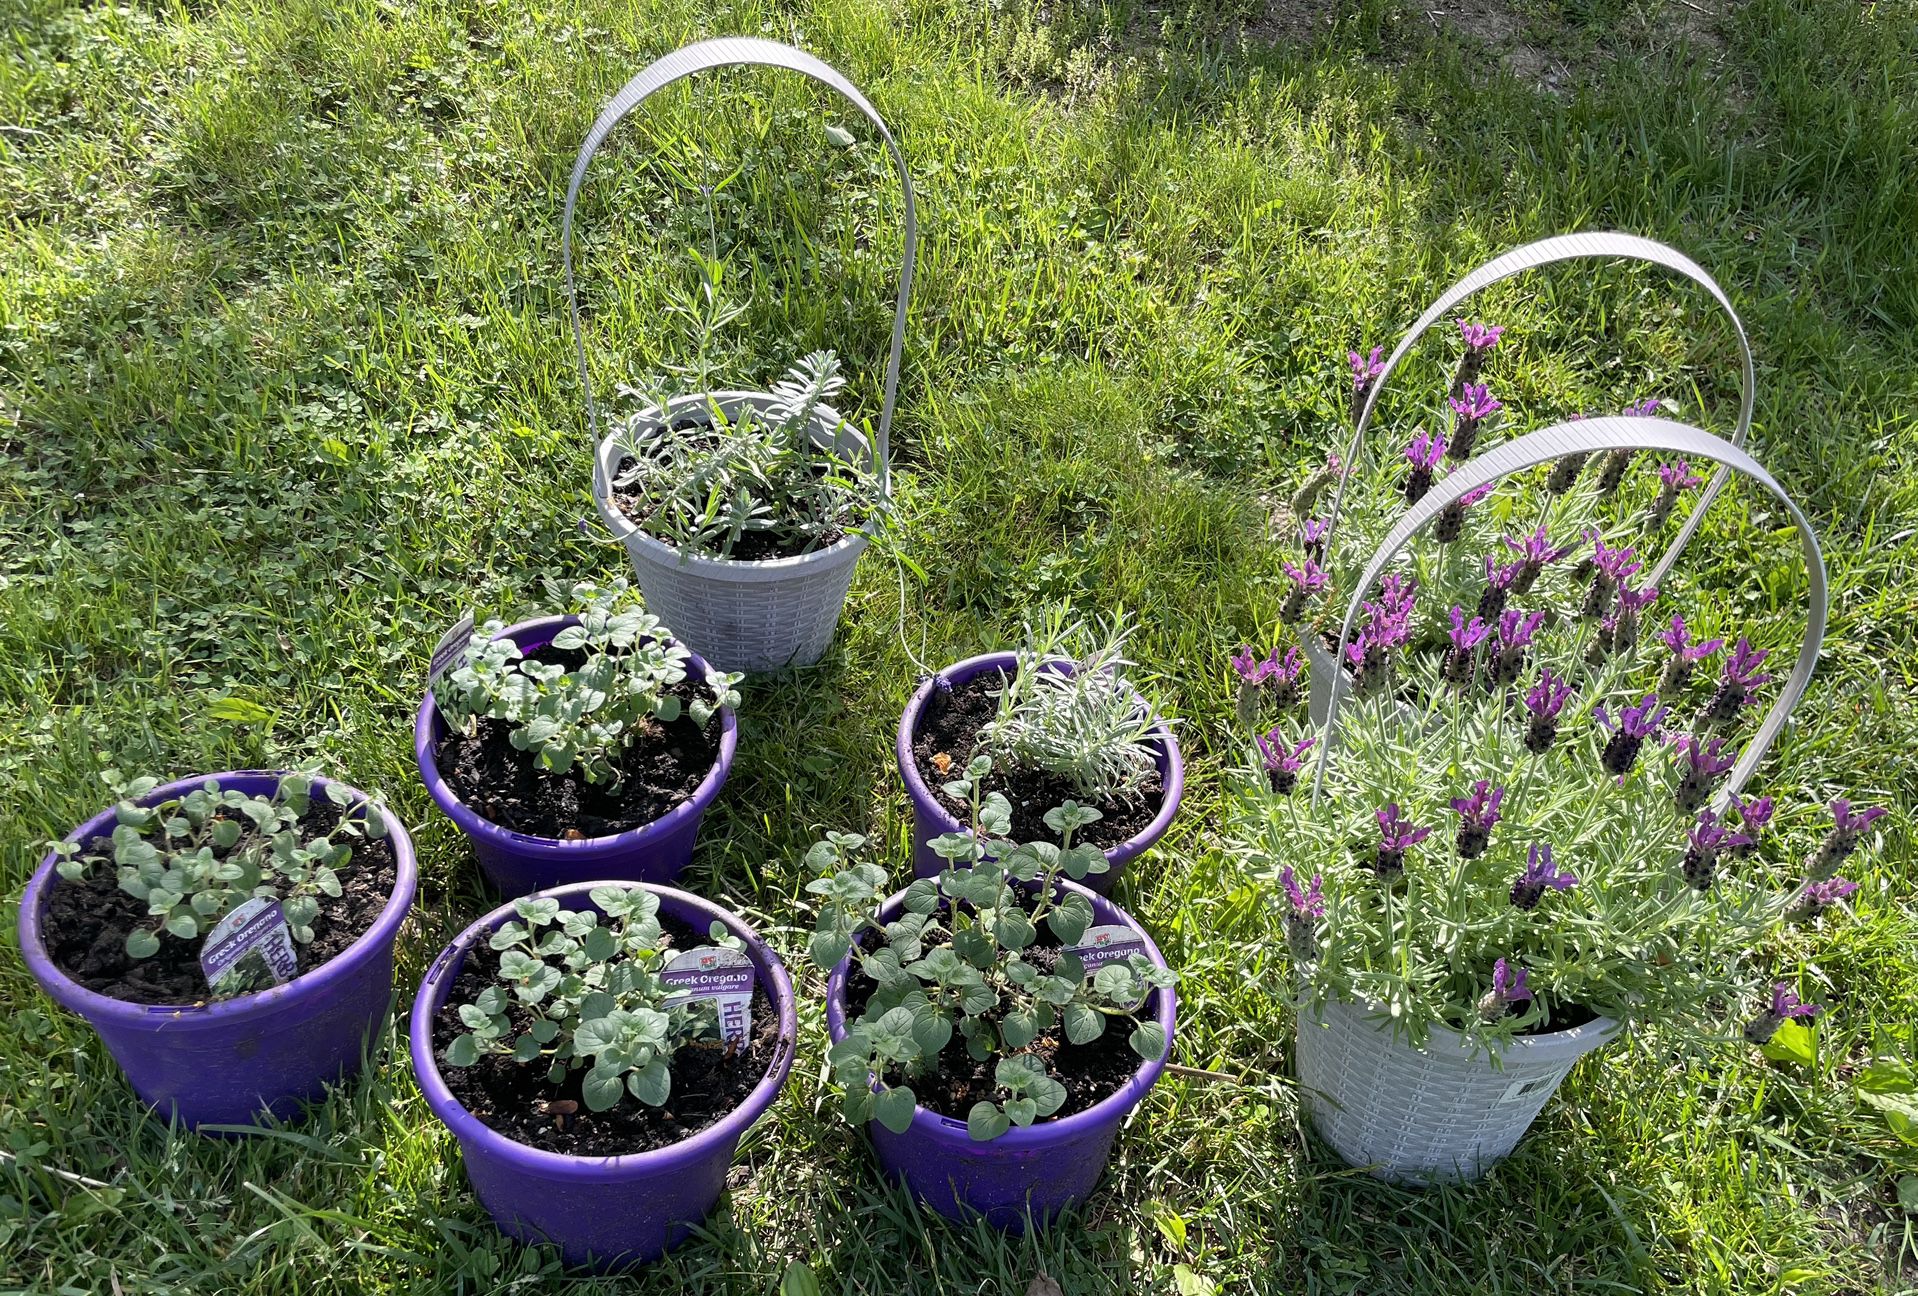 Lavender, Rosemary and Oregano Plants 